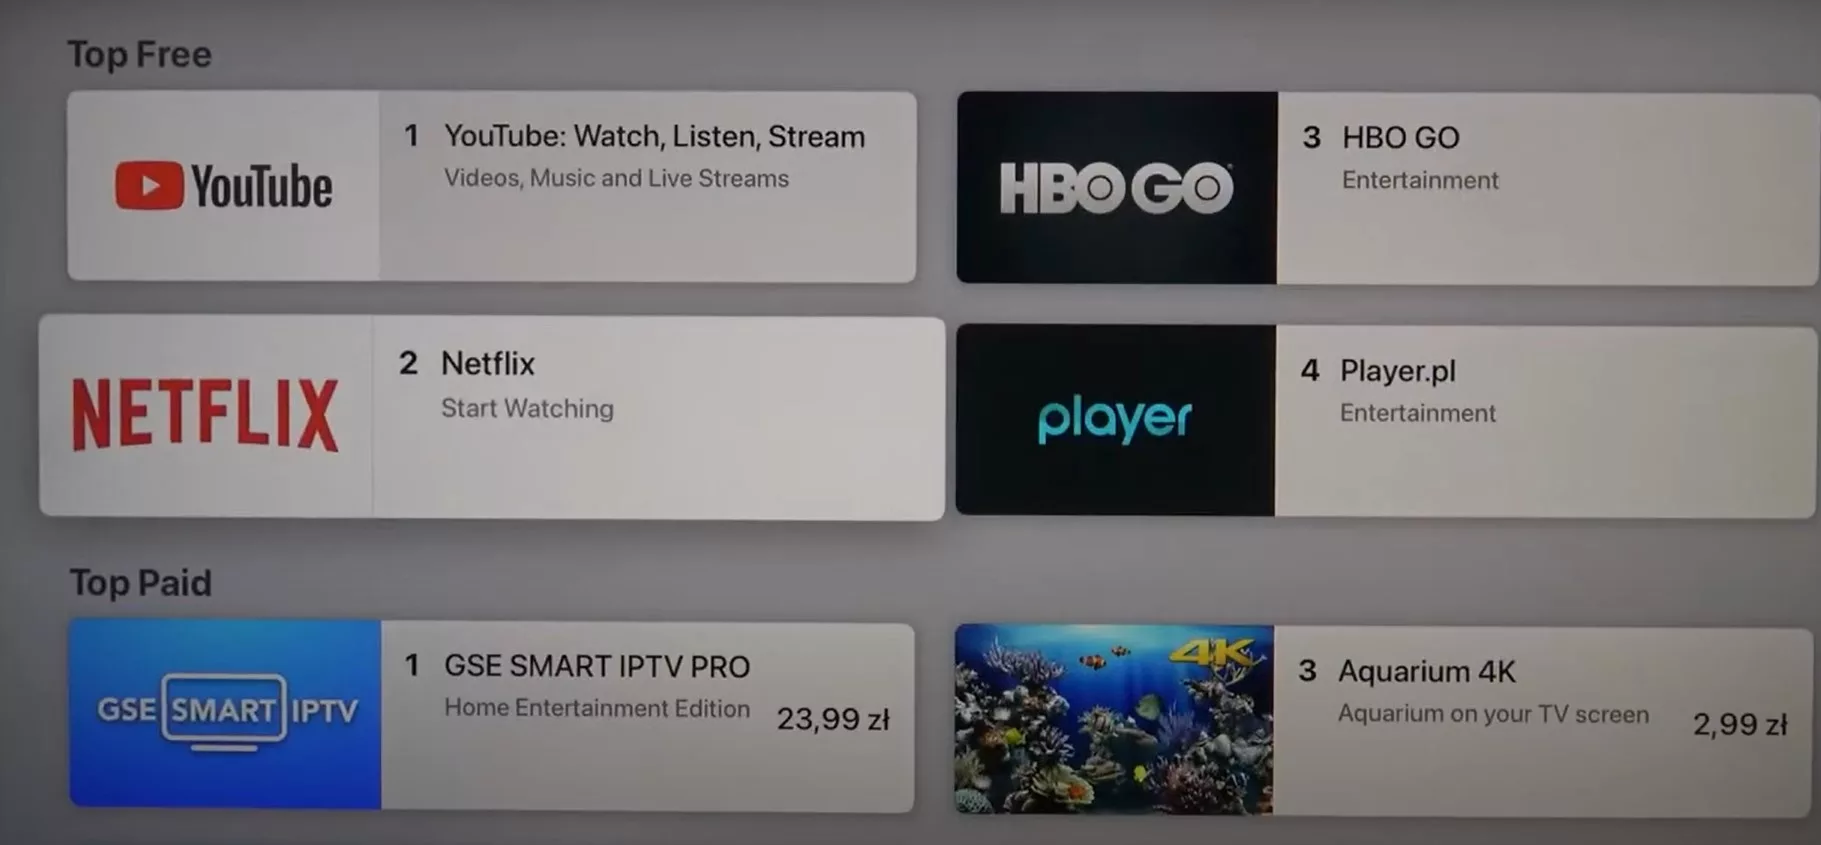 Steps To Access Netflix.com/TV8 On Apple TV